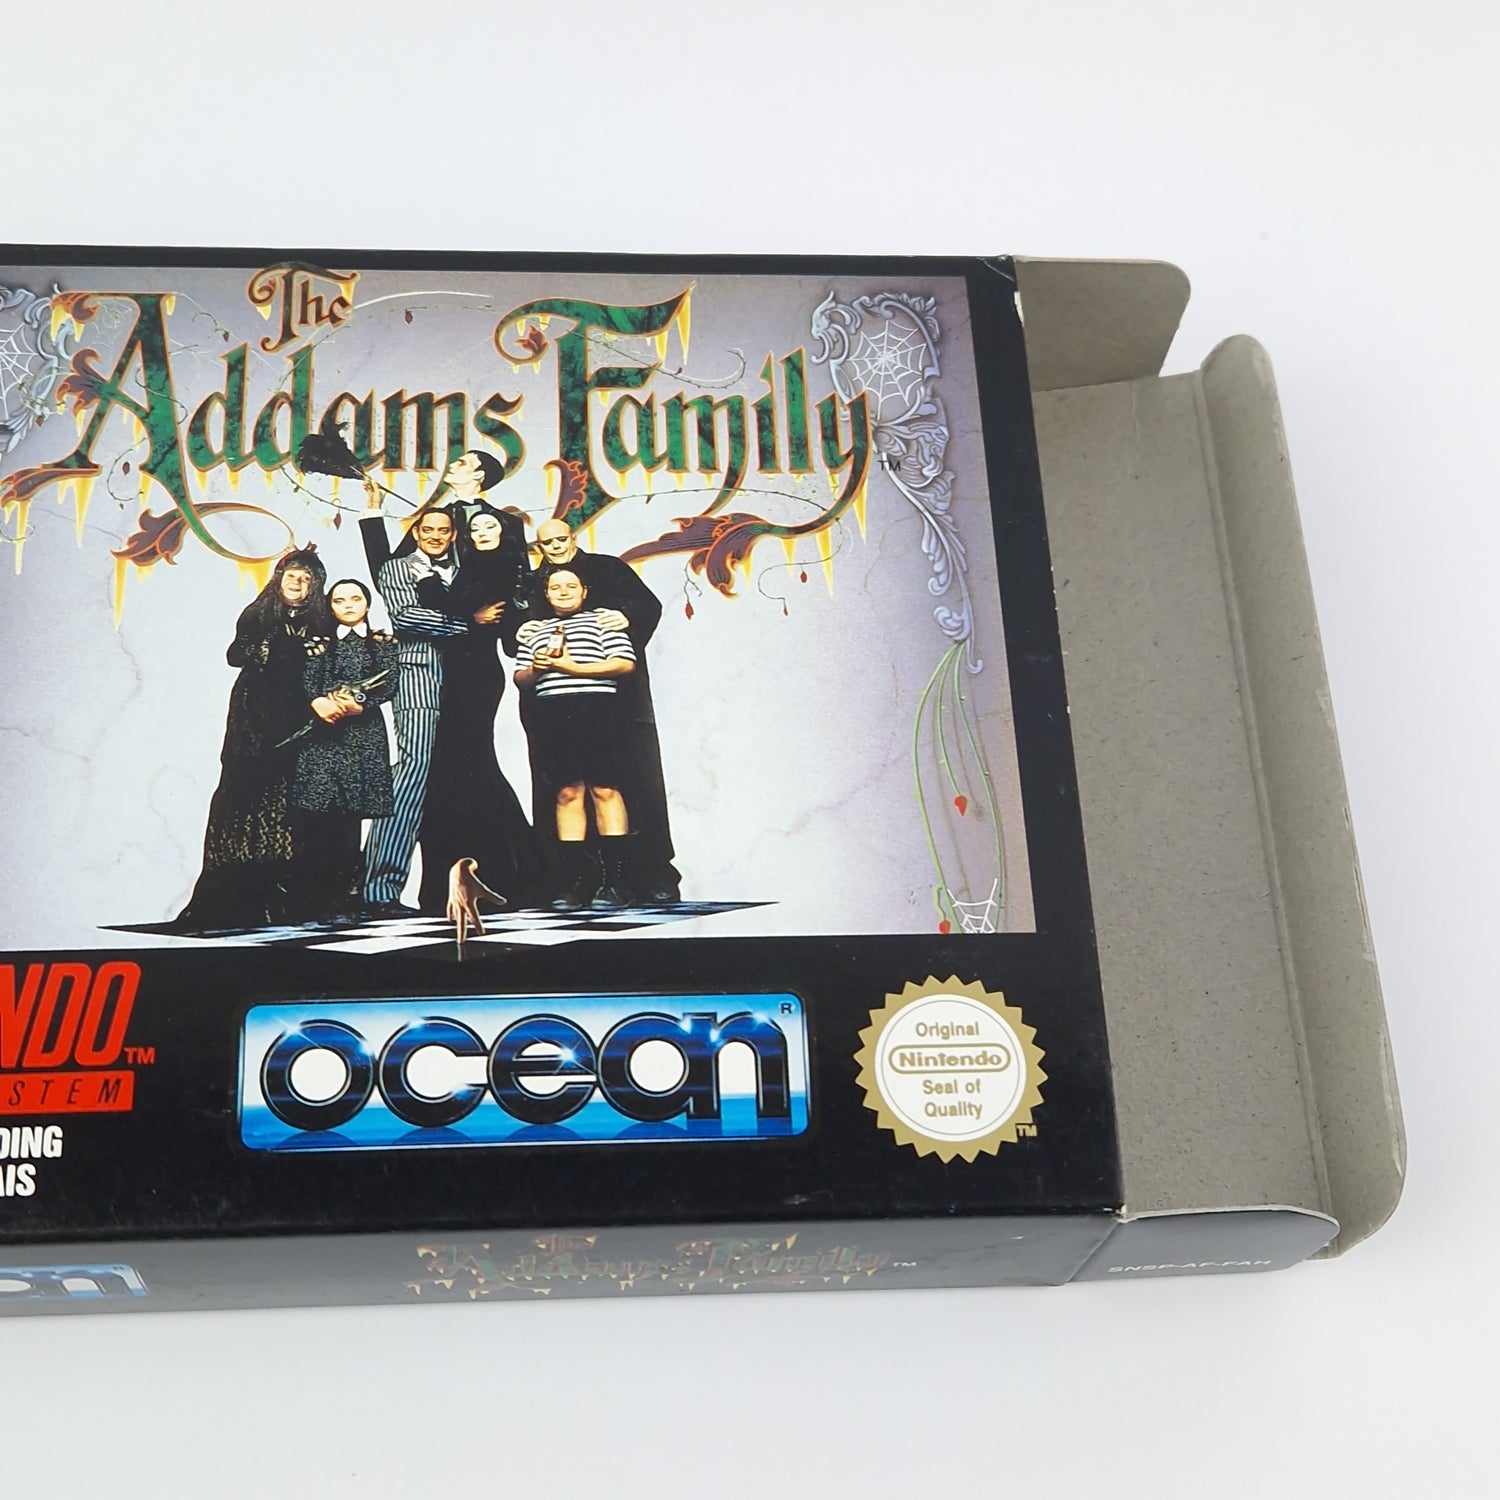 Super Nintendo Game: The Addams Family - Module Instructions OVP cib SNES PAL